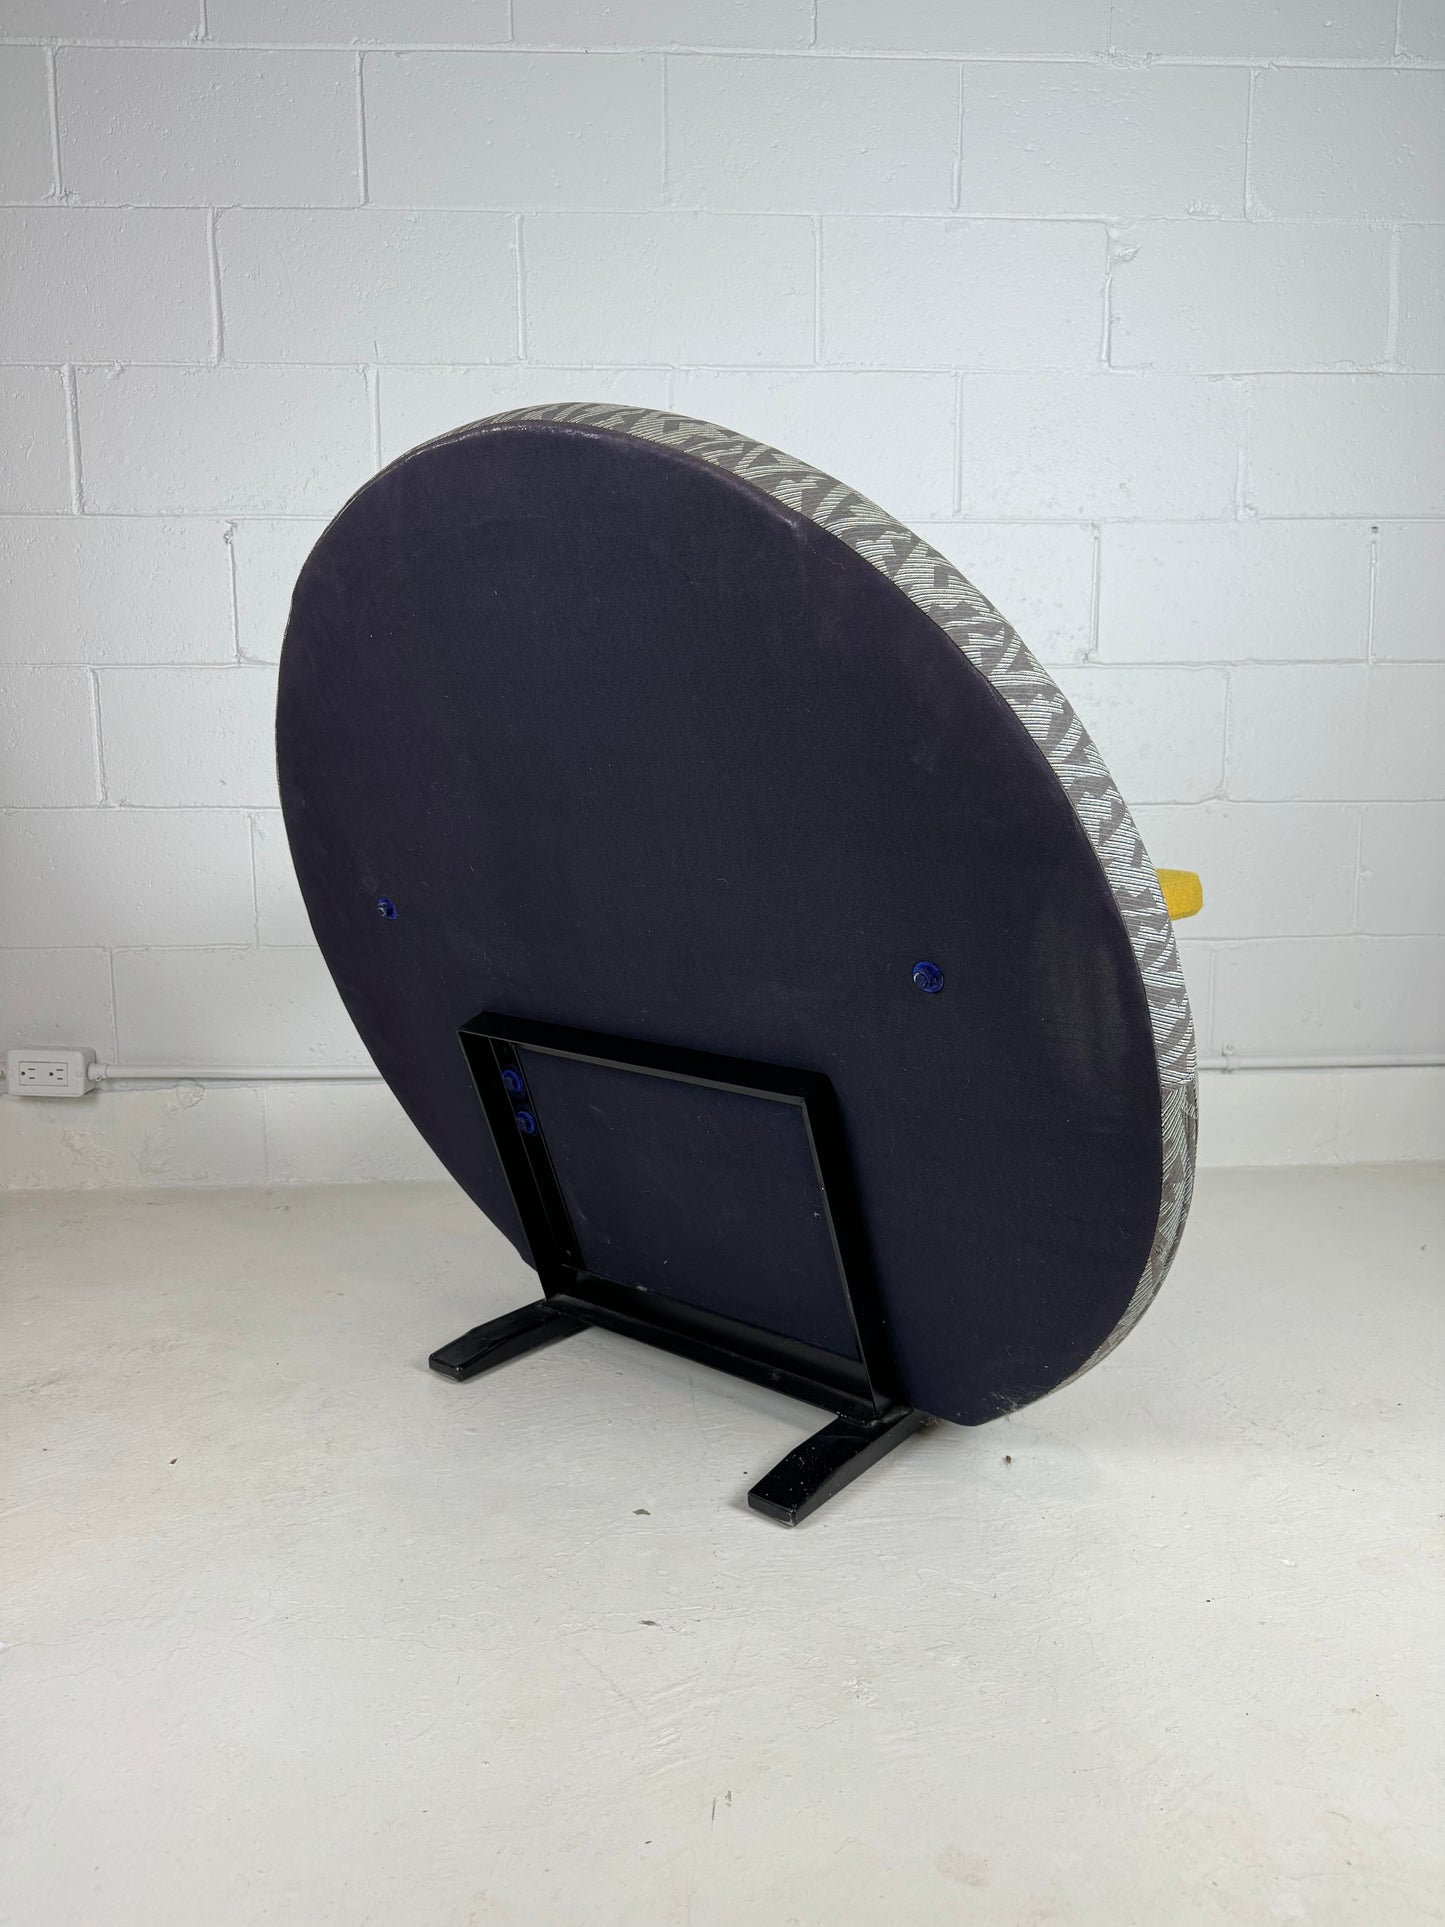 Stefan Siwinski 90's Prototype Chair Round Memphis Style